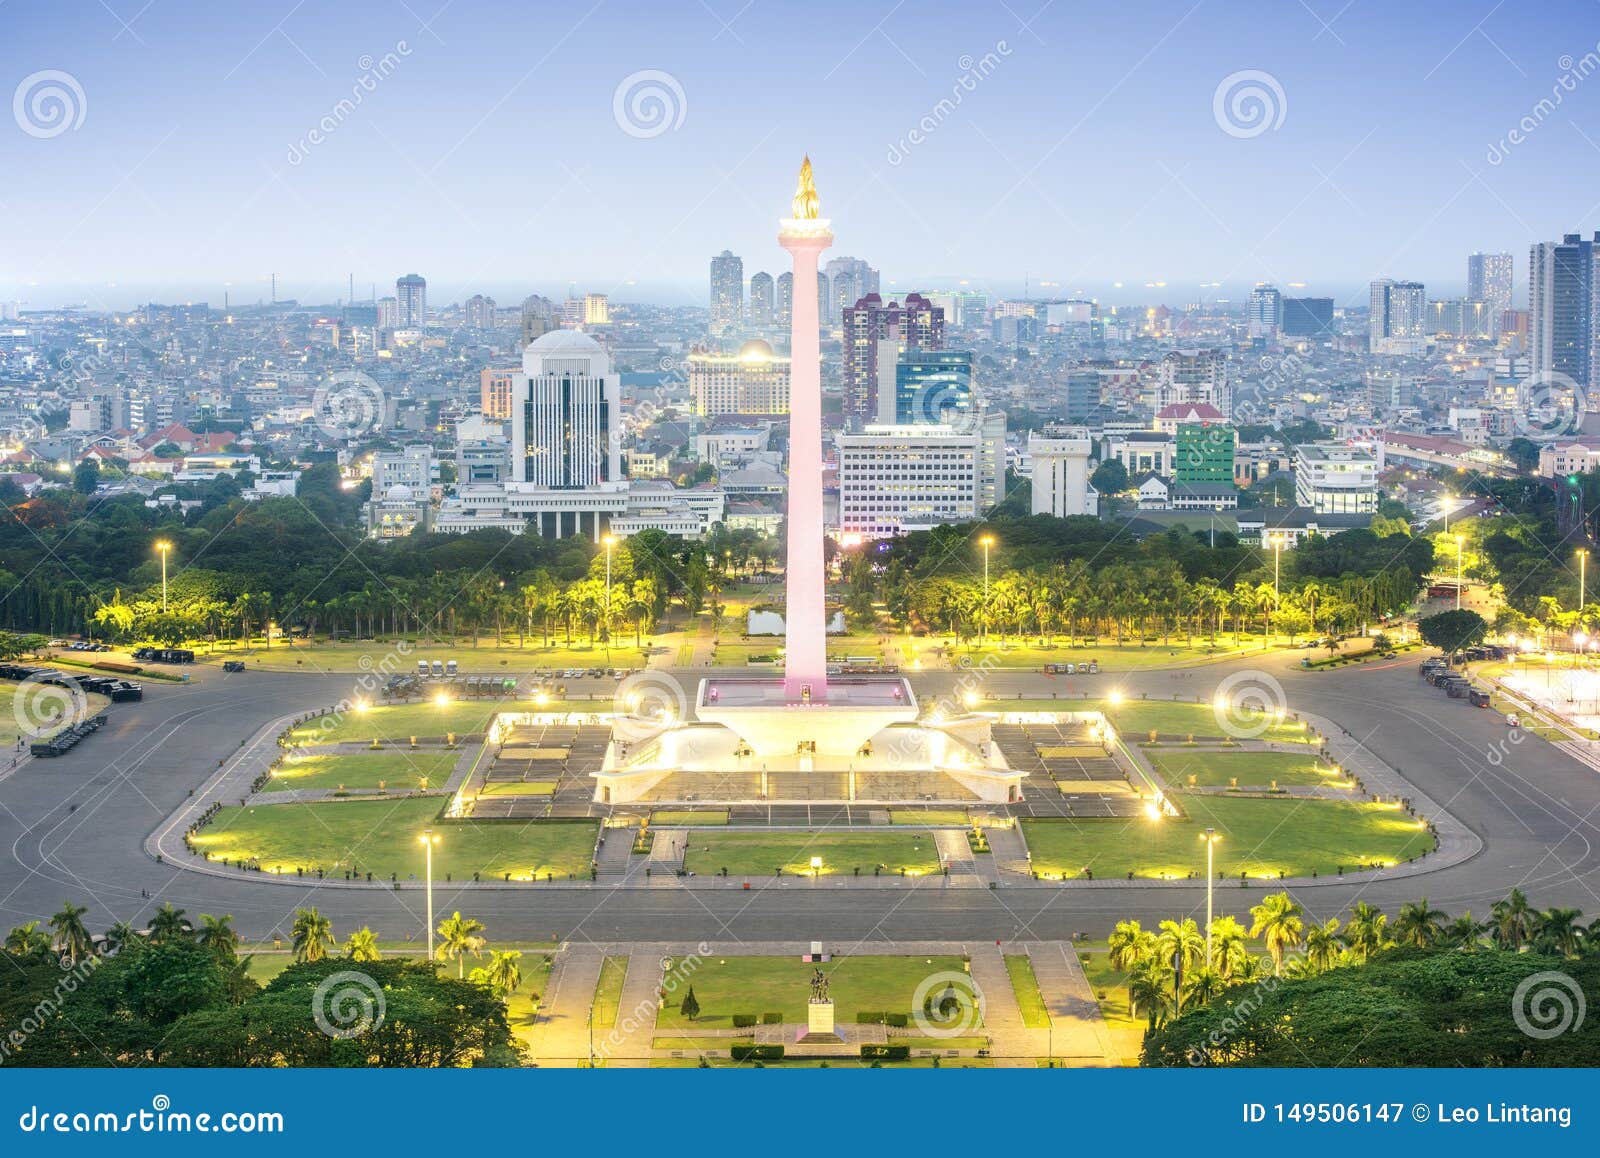 jakarta city skyline with iconic  likes national monument monas at night